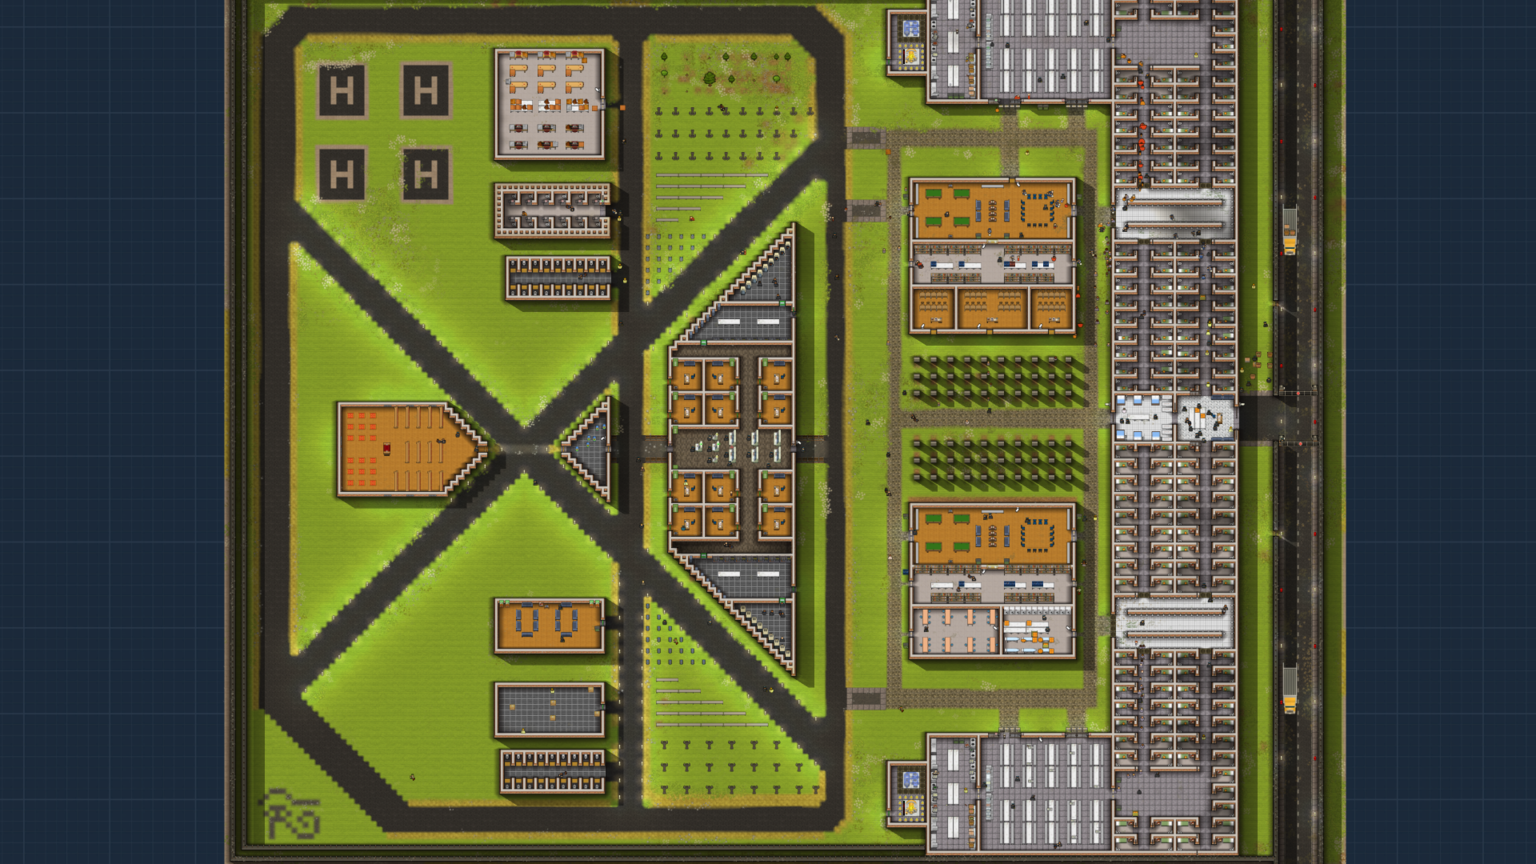 nice prison architect layout